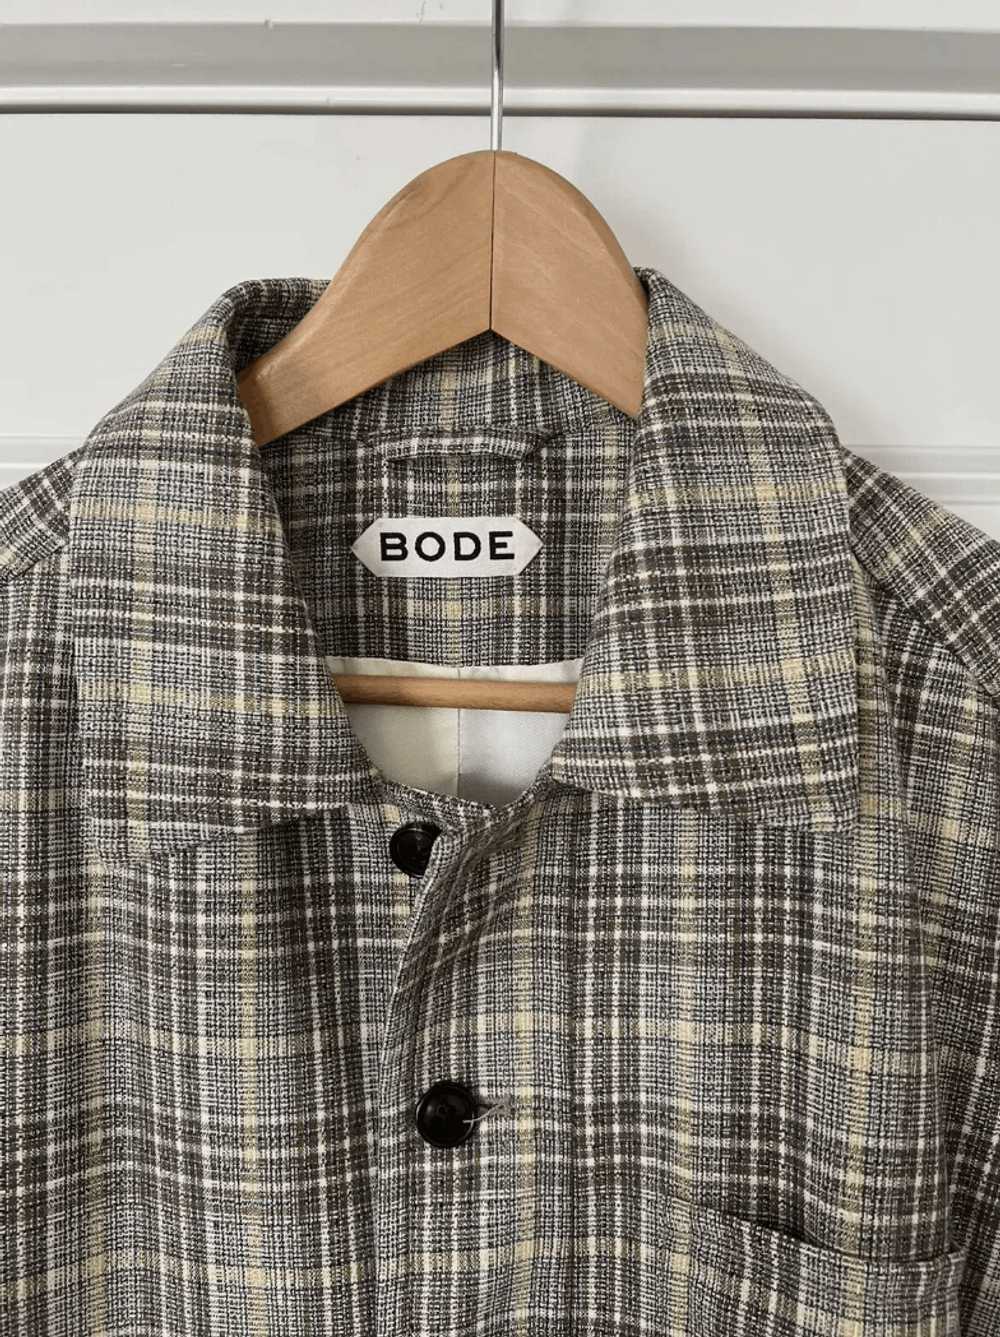 Bode one of a kind plaid work jacket - image 5